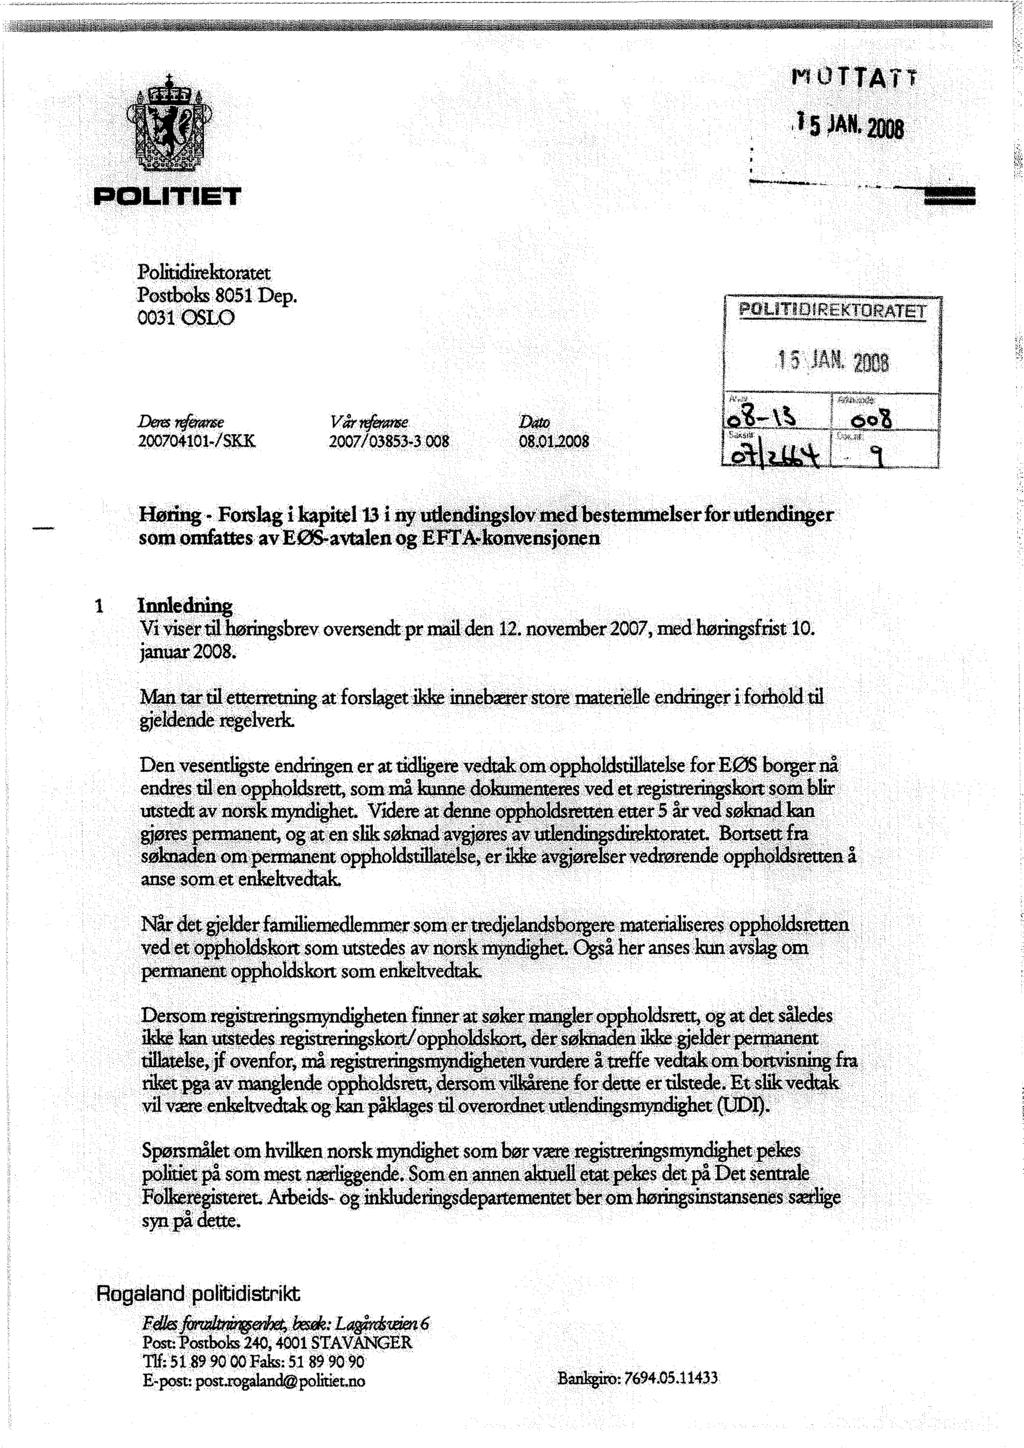 POLITIET Politidirektoratet Postboks 8051 Dep. 0031 OSLO Cra,AT E- Dens r eranse Vår ~e Dam 200704101-